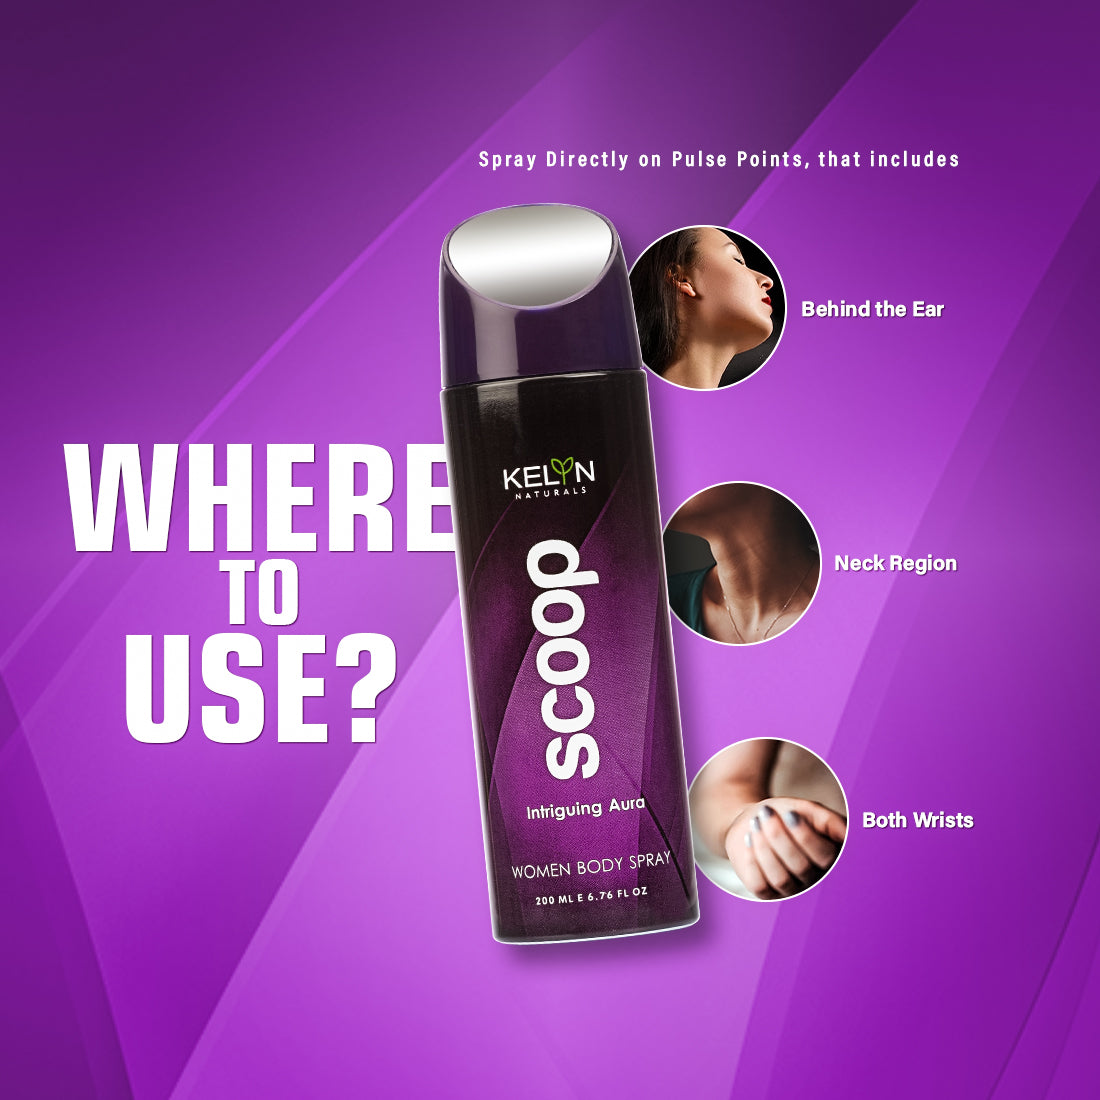 Scoop Deodorant for Women Body Spray, 200 ml